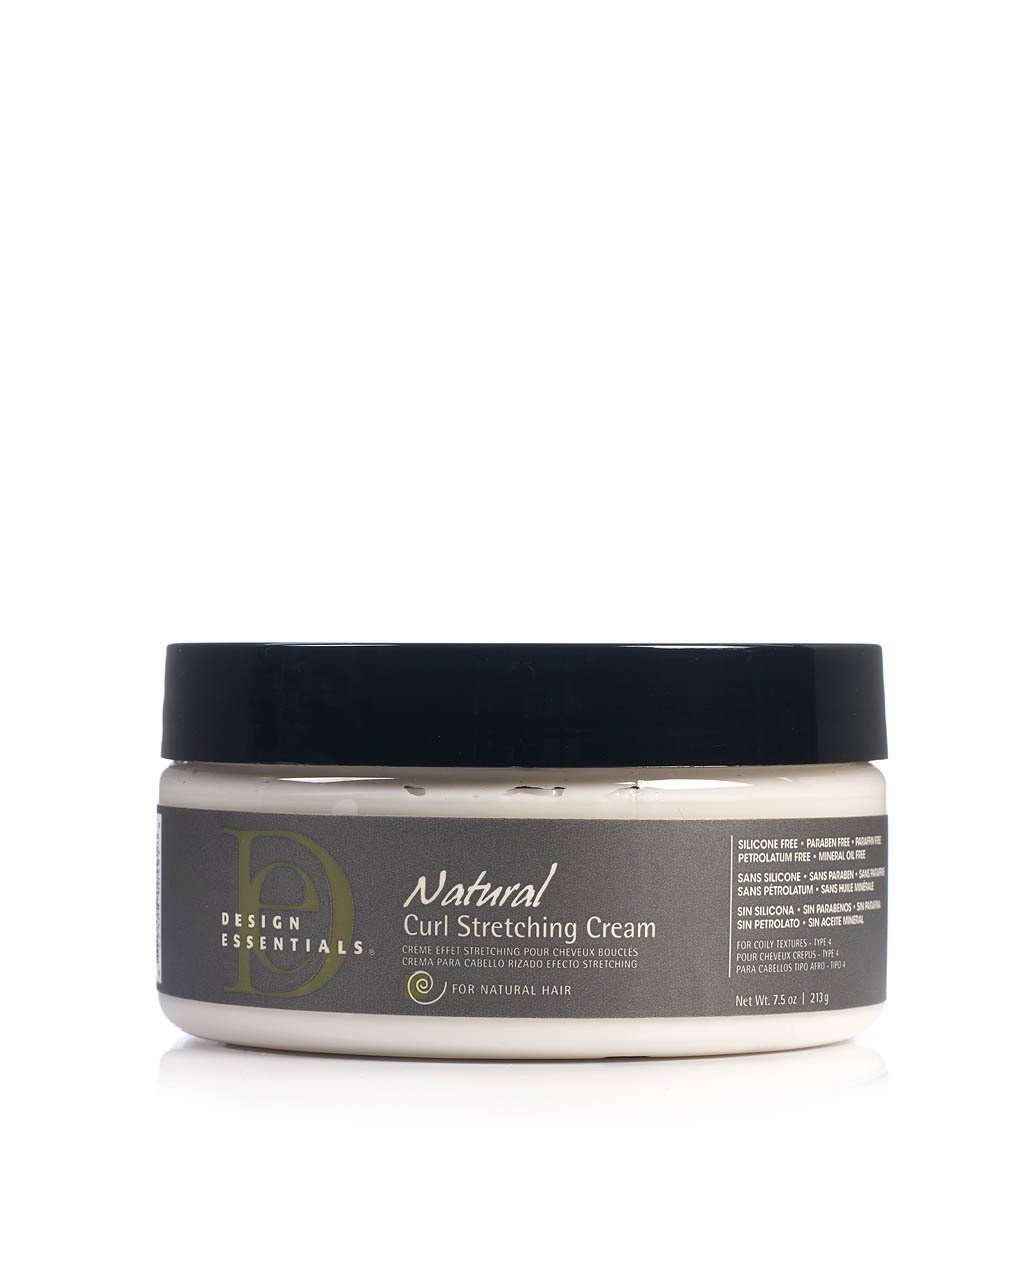 Design Essentials Natural Almond & Avocado Curl Stretching Cream